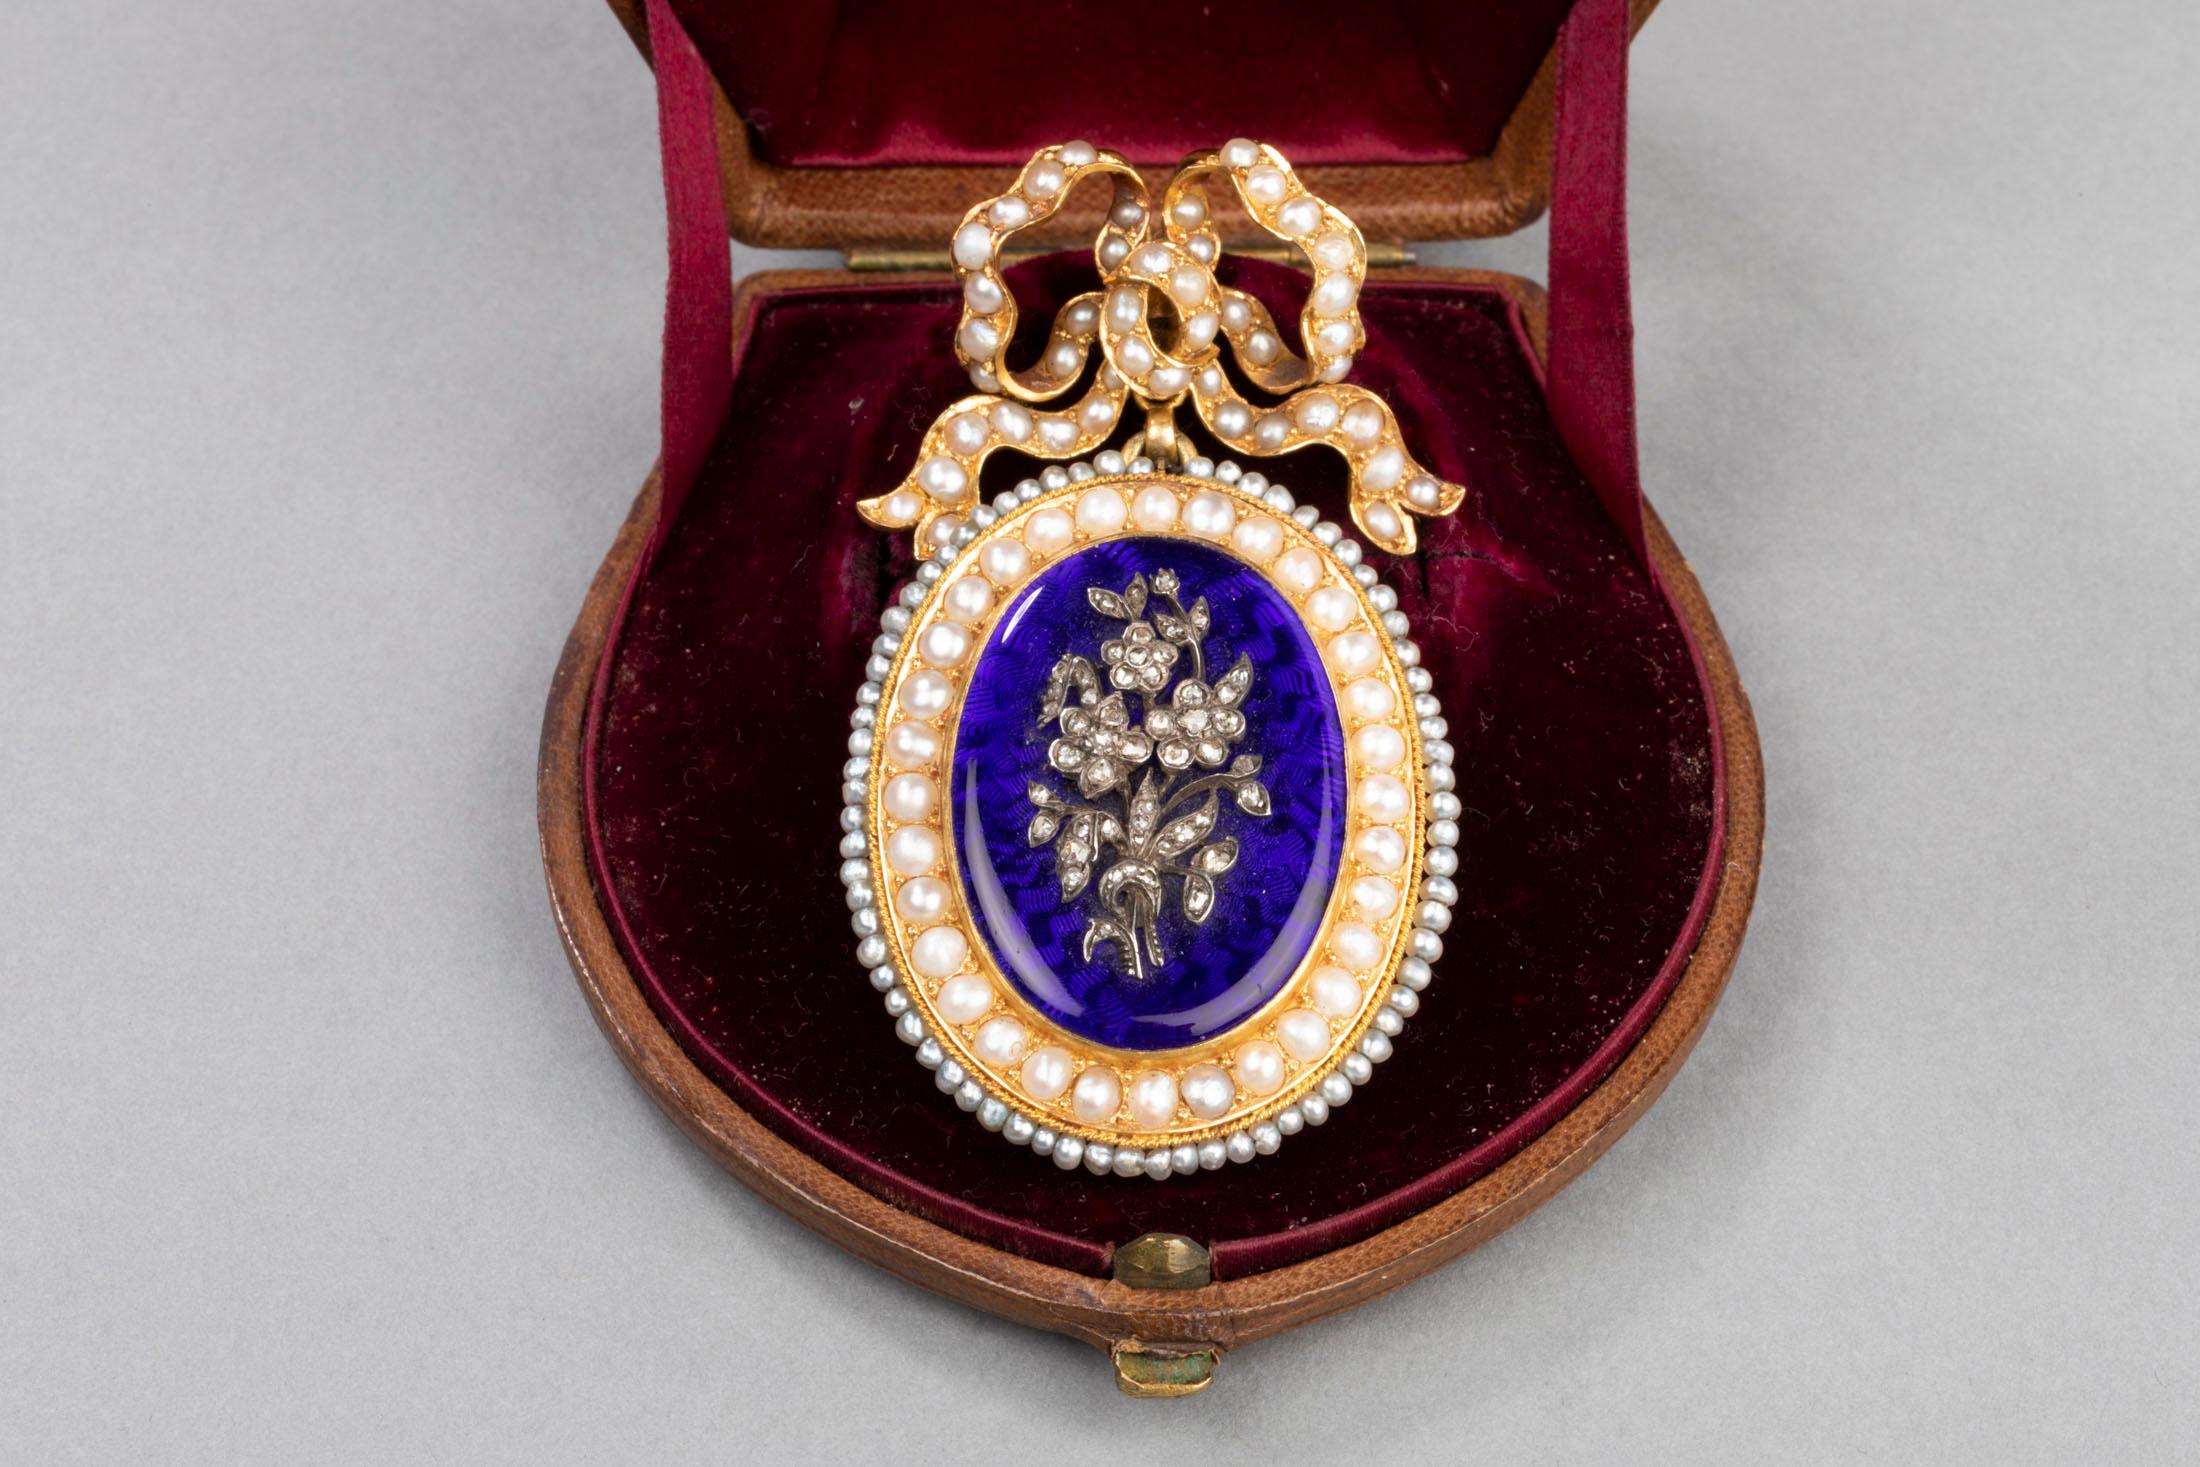 Antique Napoleon III Locket, Gold Enamel and Pearls 1